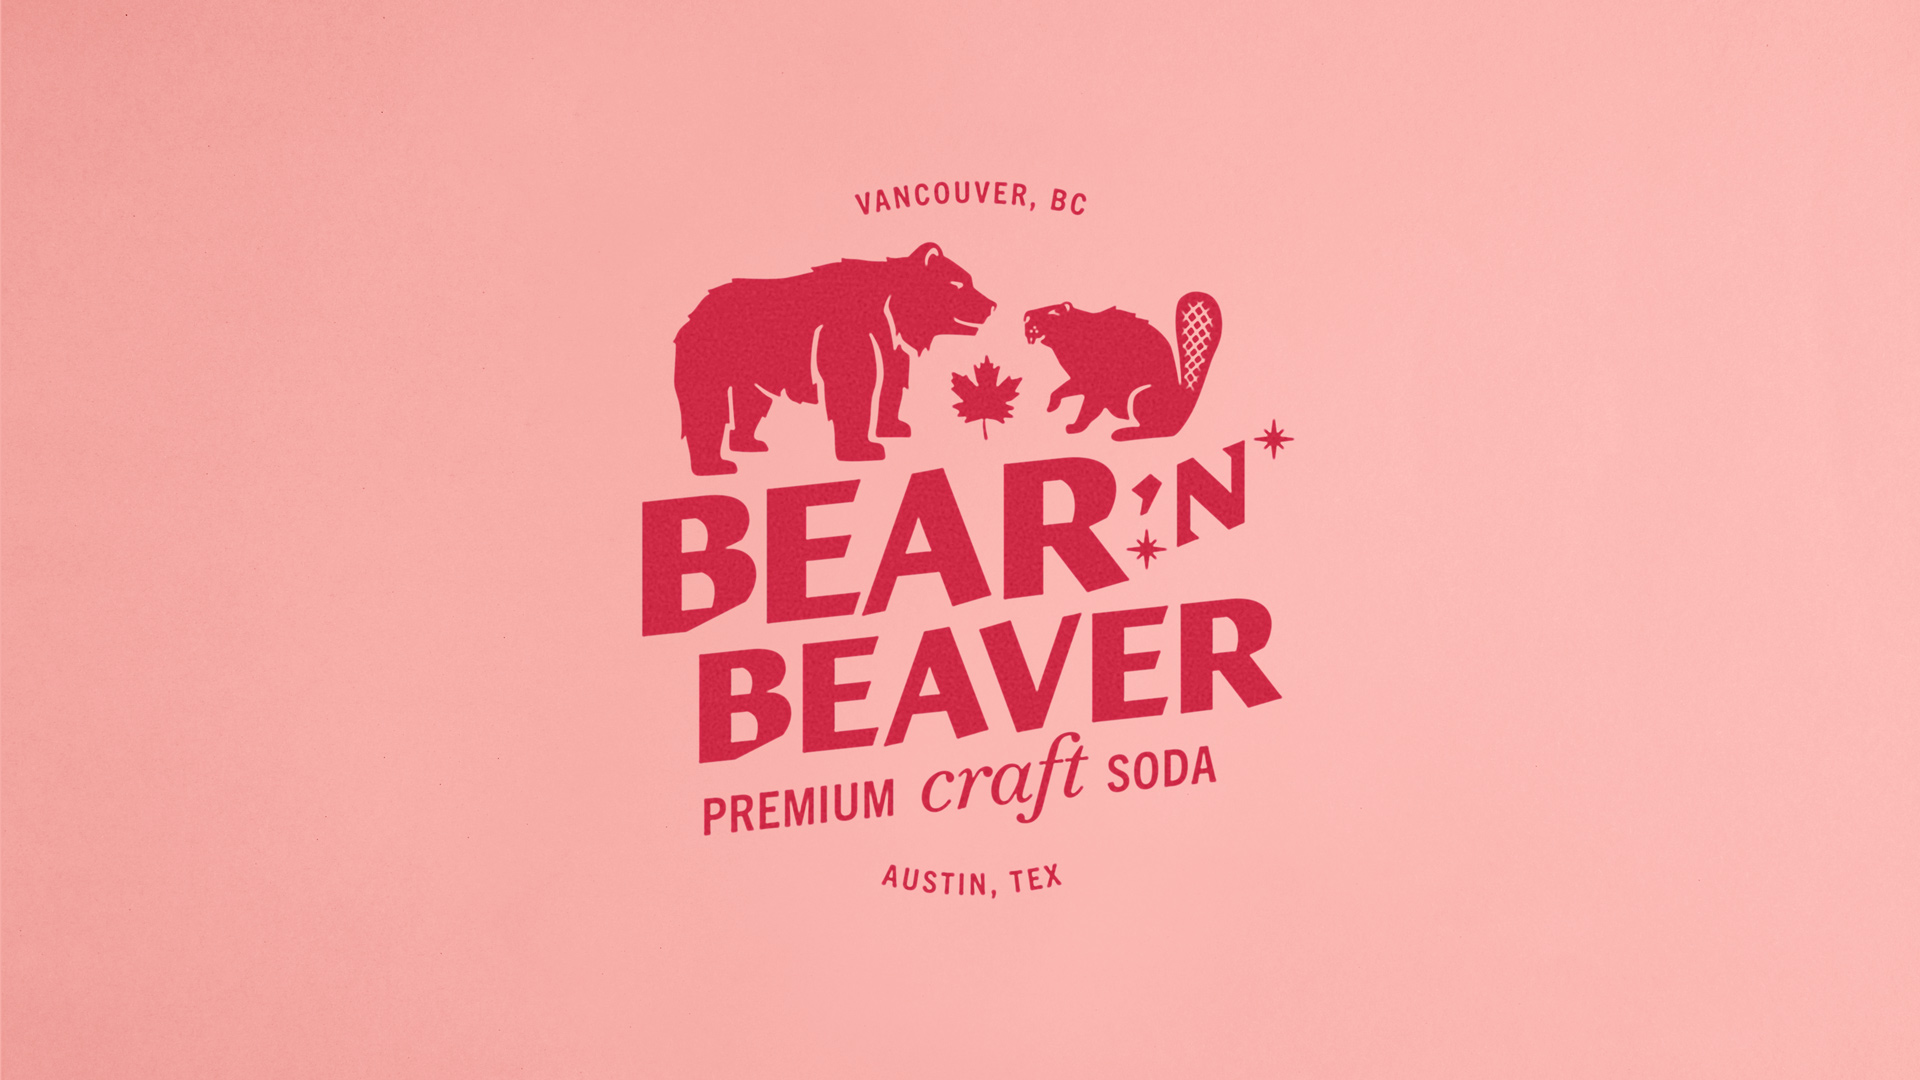 Bear ’n Beaver—Deliciously Distinctive Craft Soda